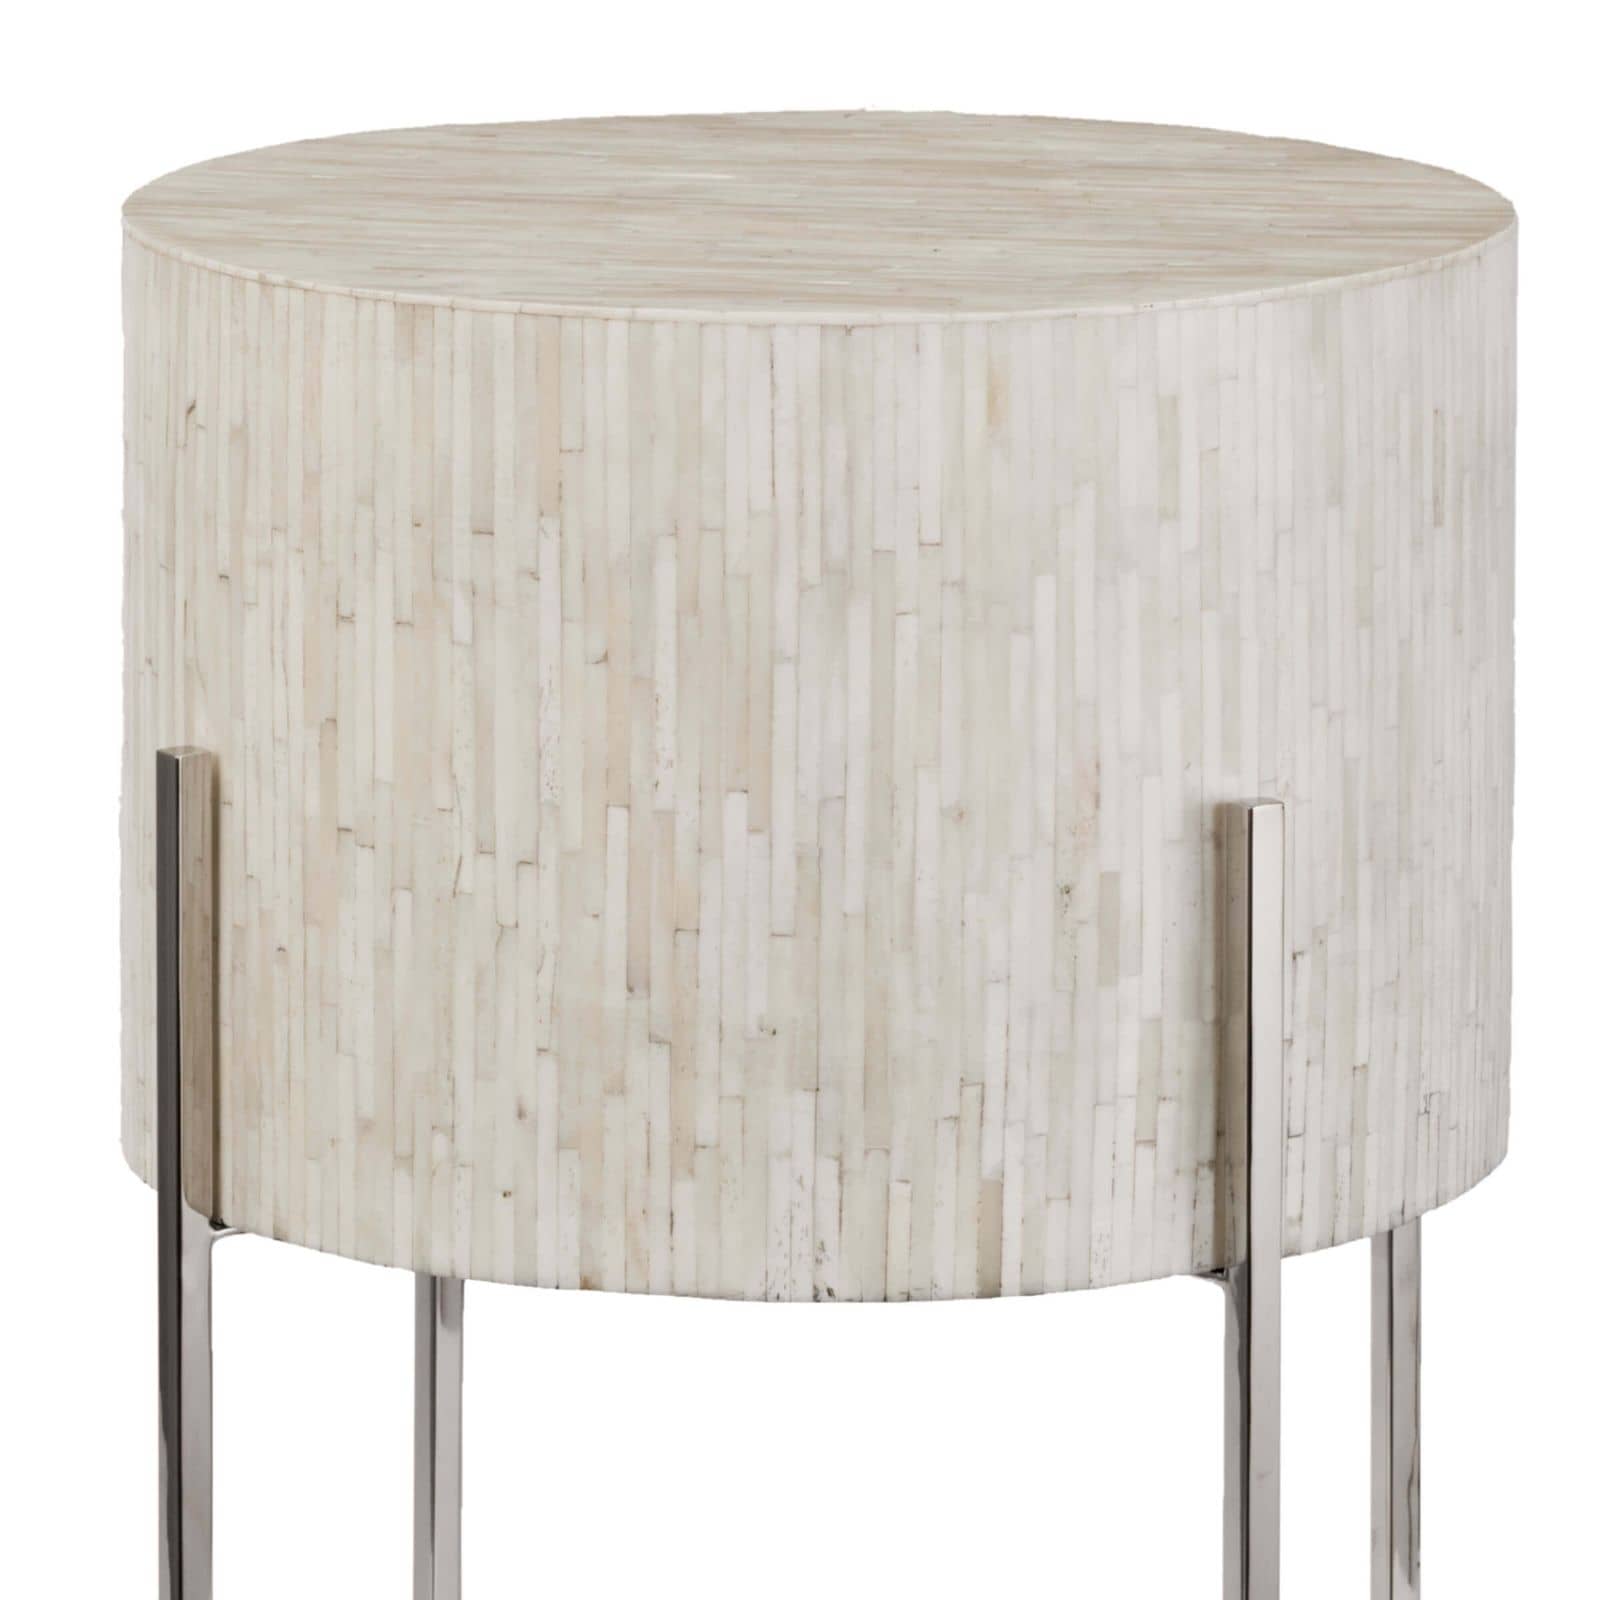 Bone Drum Table - Polished Nickel - - Furniture - Tipplergoods